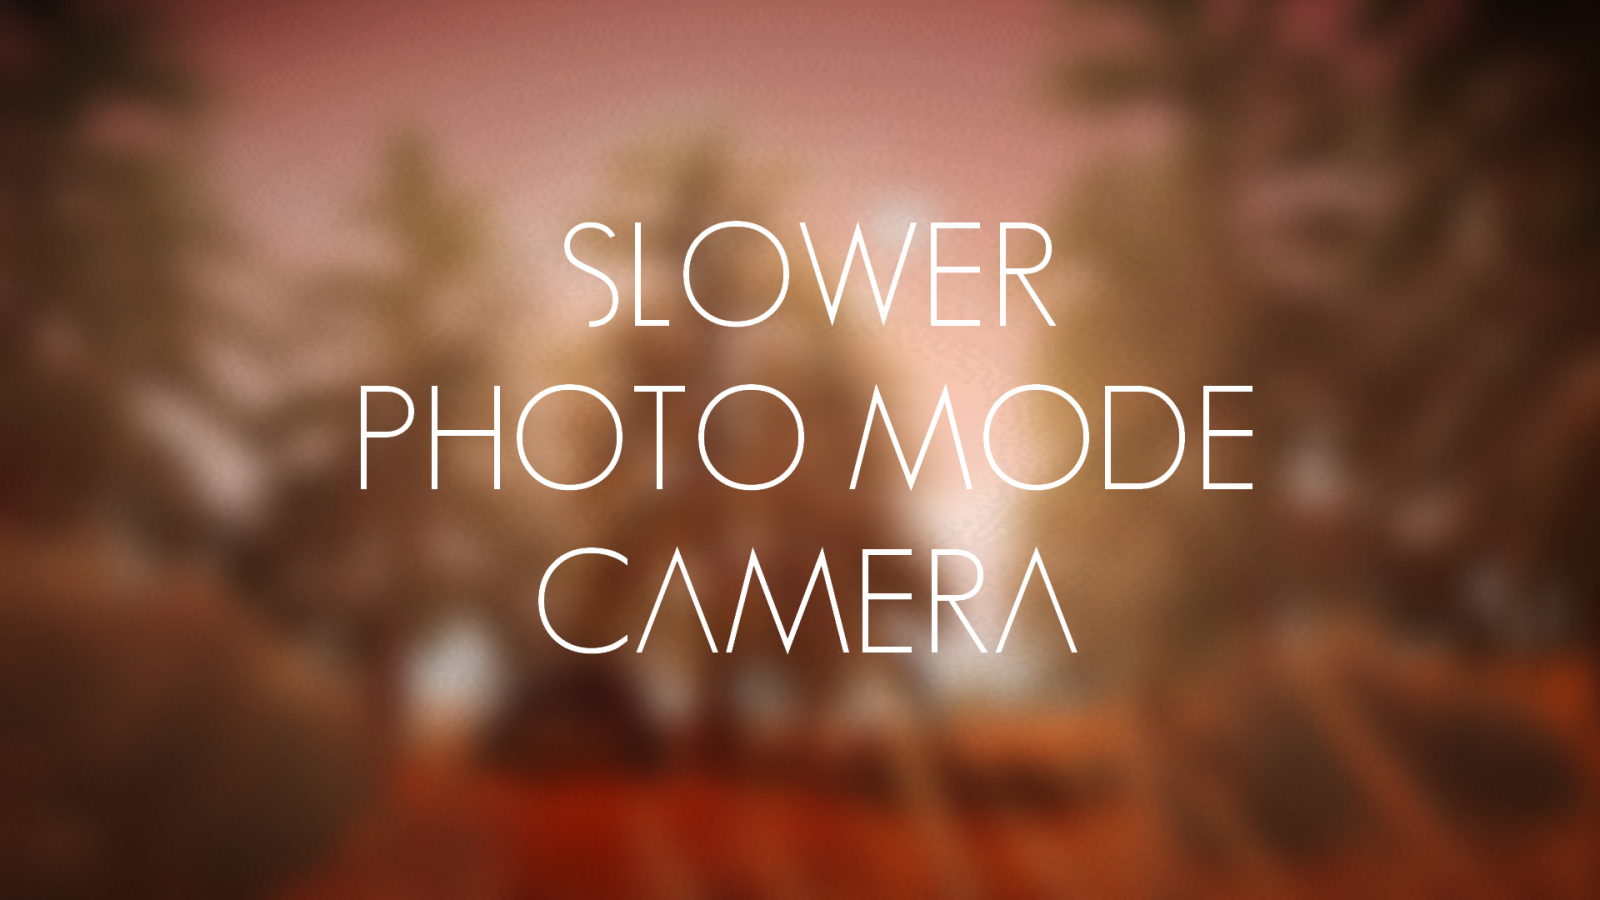 Slow photo mode camera